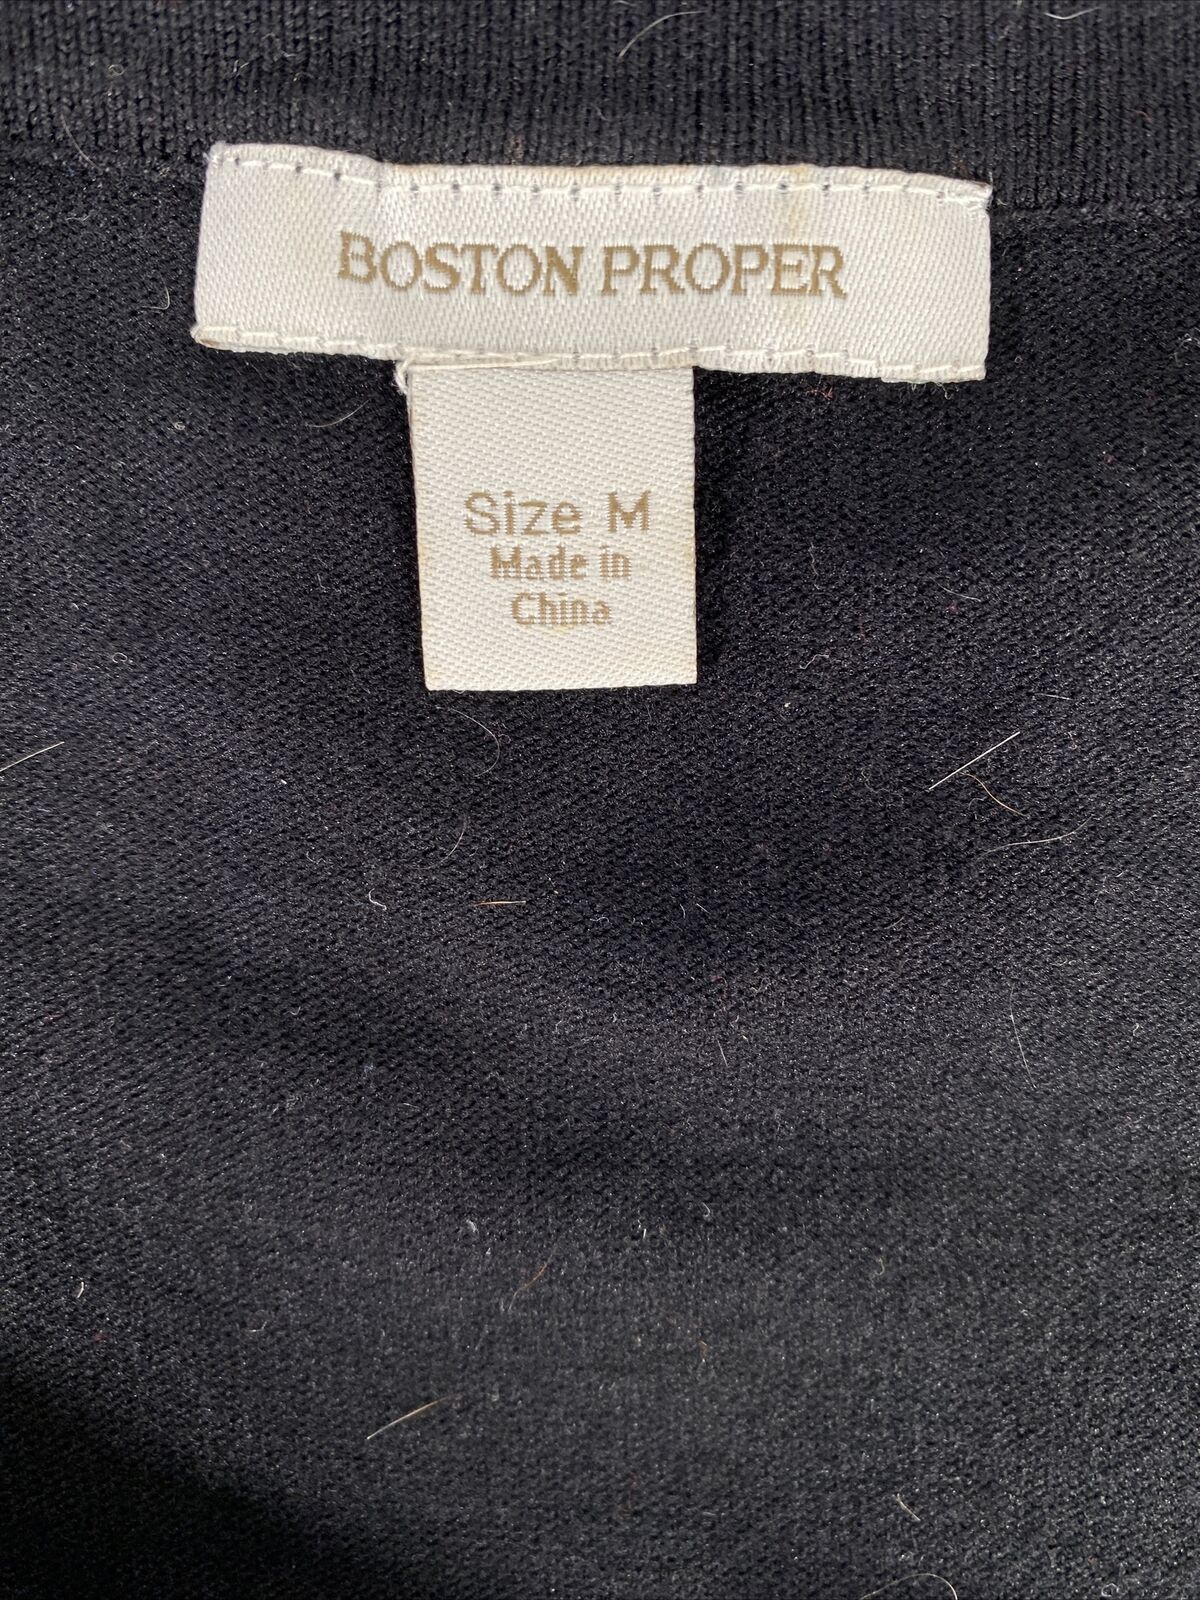 Boston Proper Women's Black/Silver Sequin Front 1/2 Sleeve Blouse Sz M